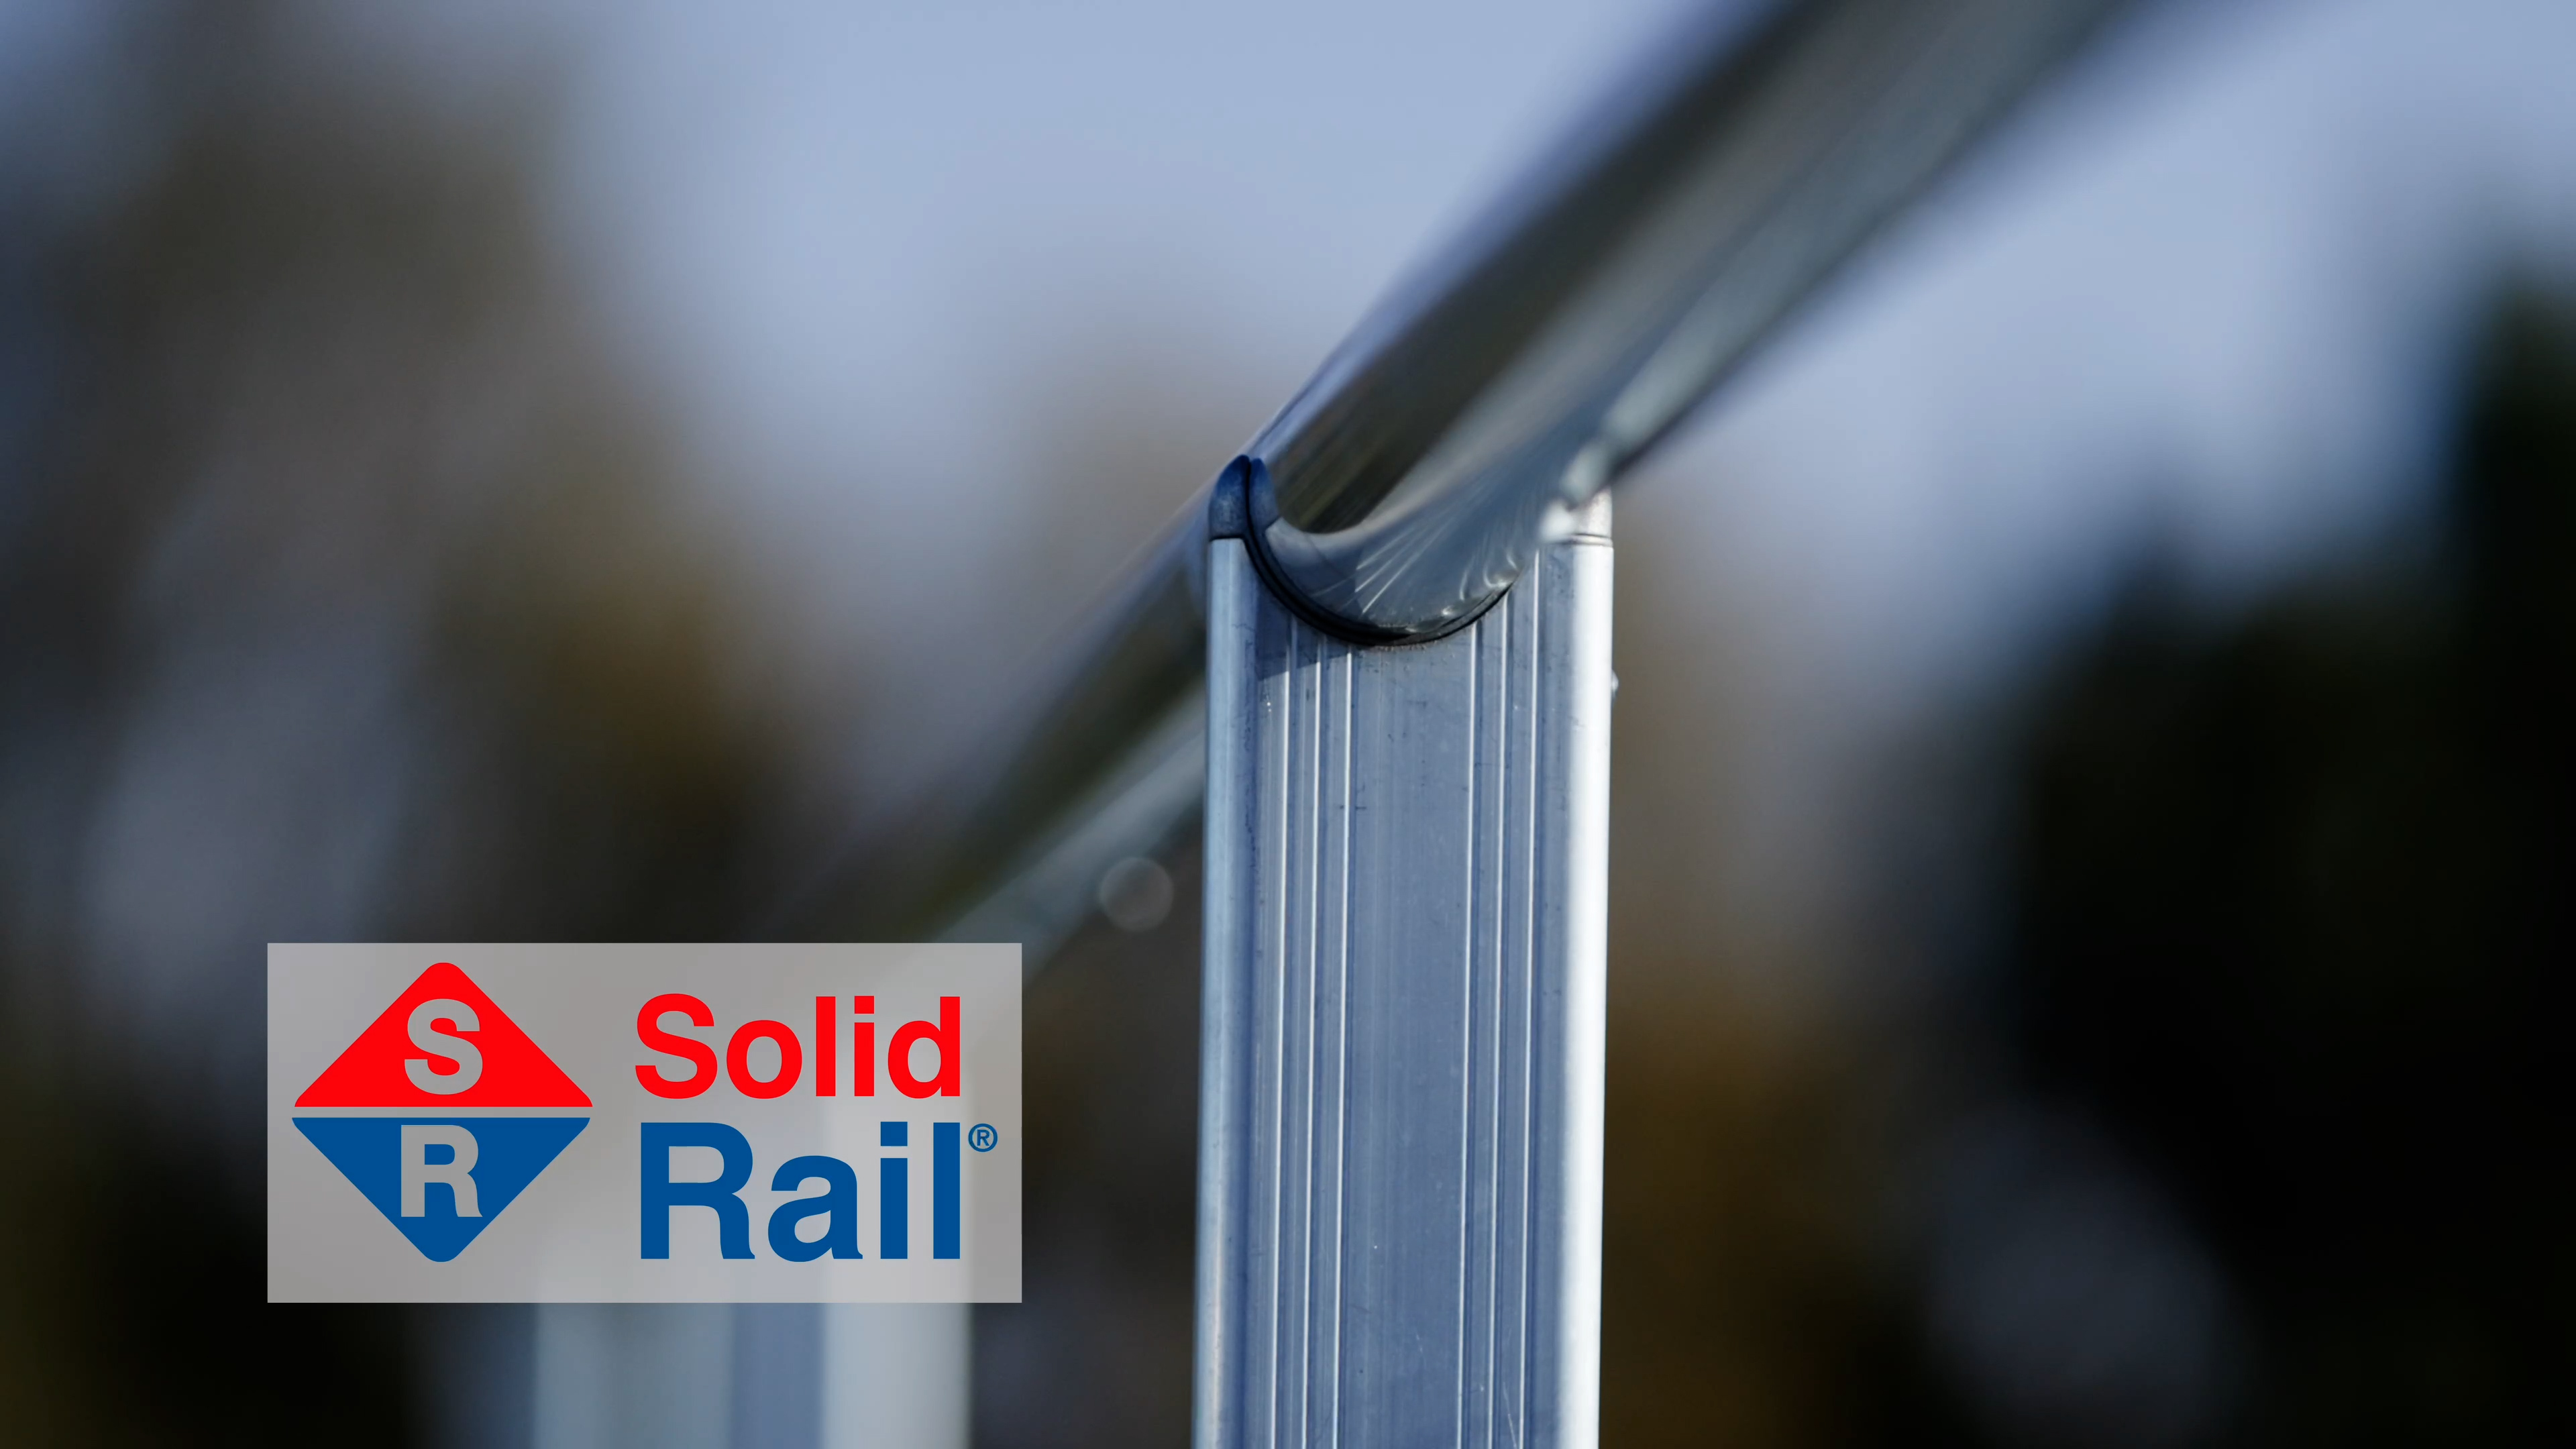 SolidRail® Aluminuim Guardrail - Edge Protection System